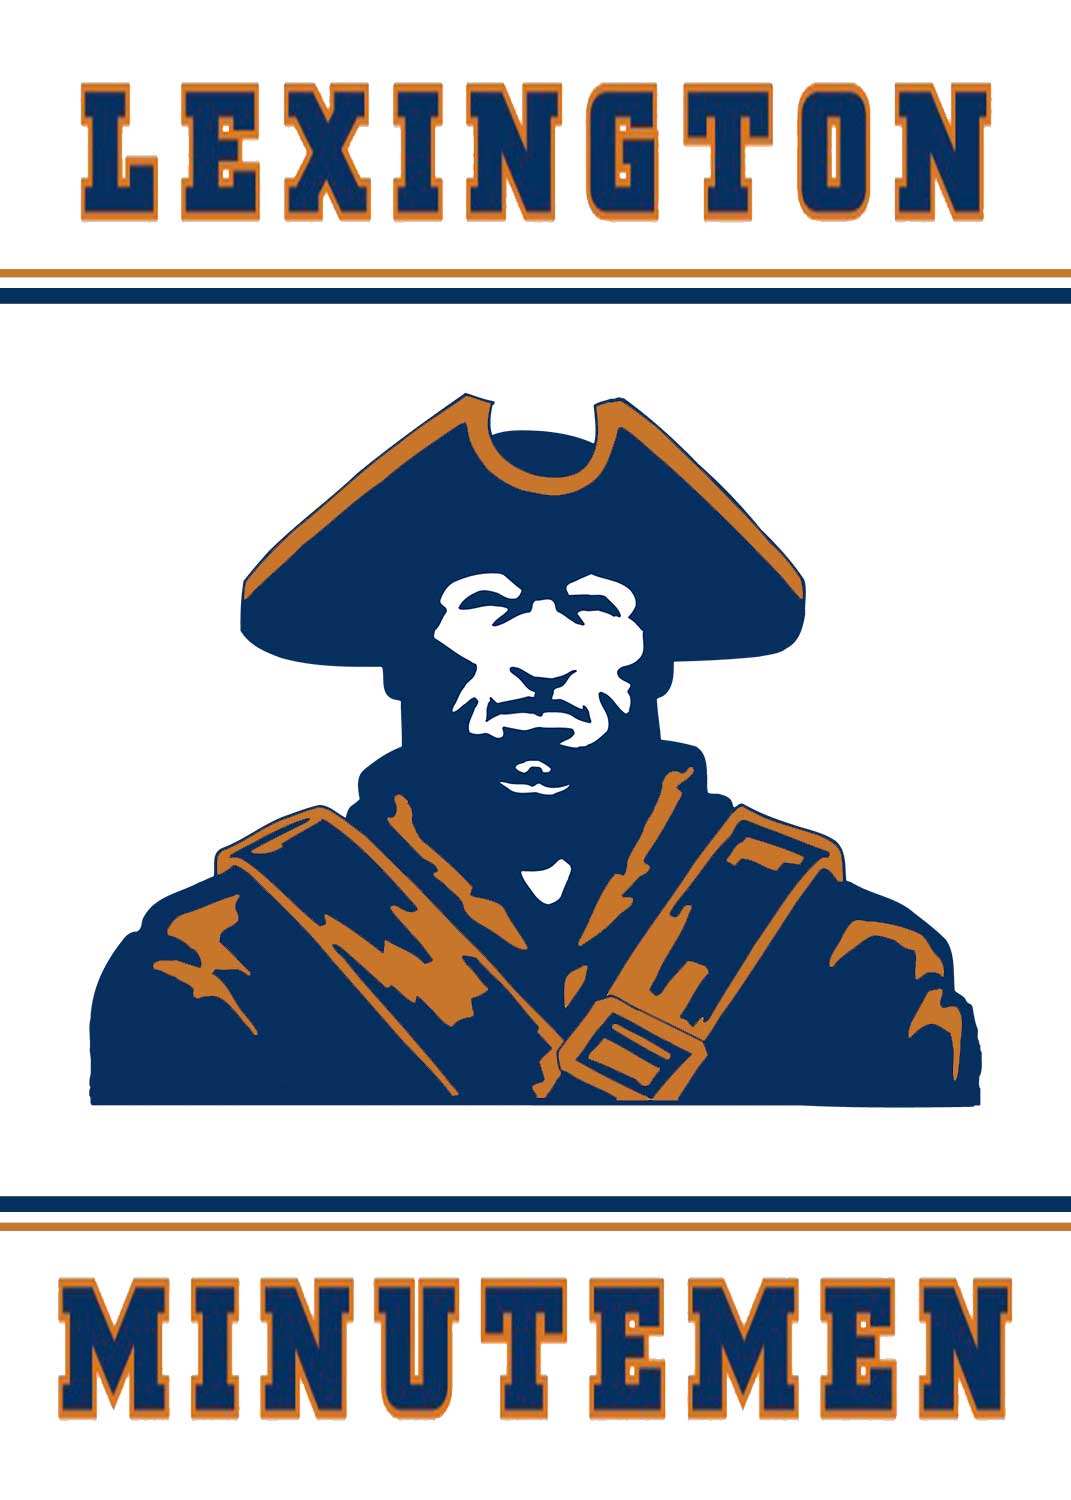 Minutemen Mascot Banner